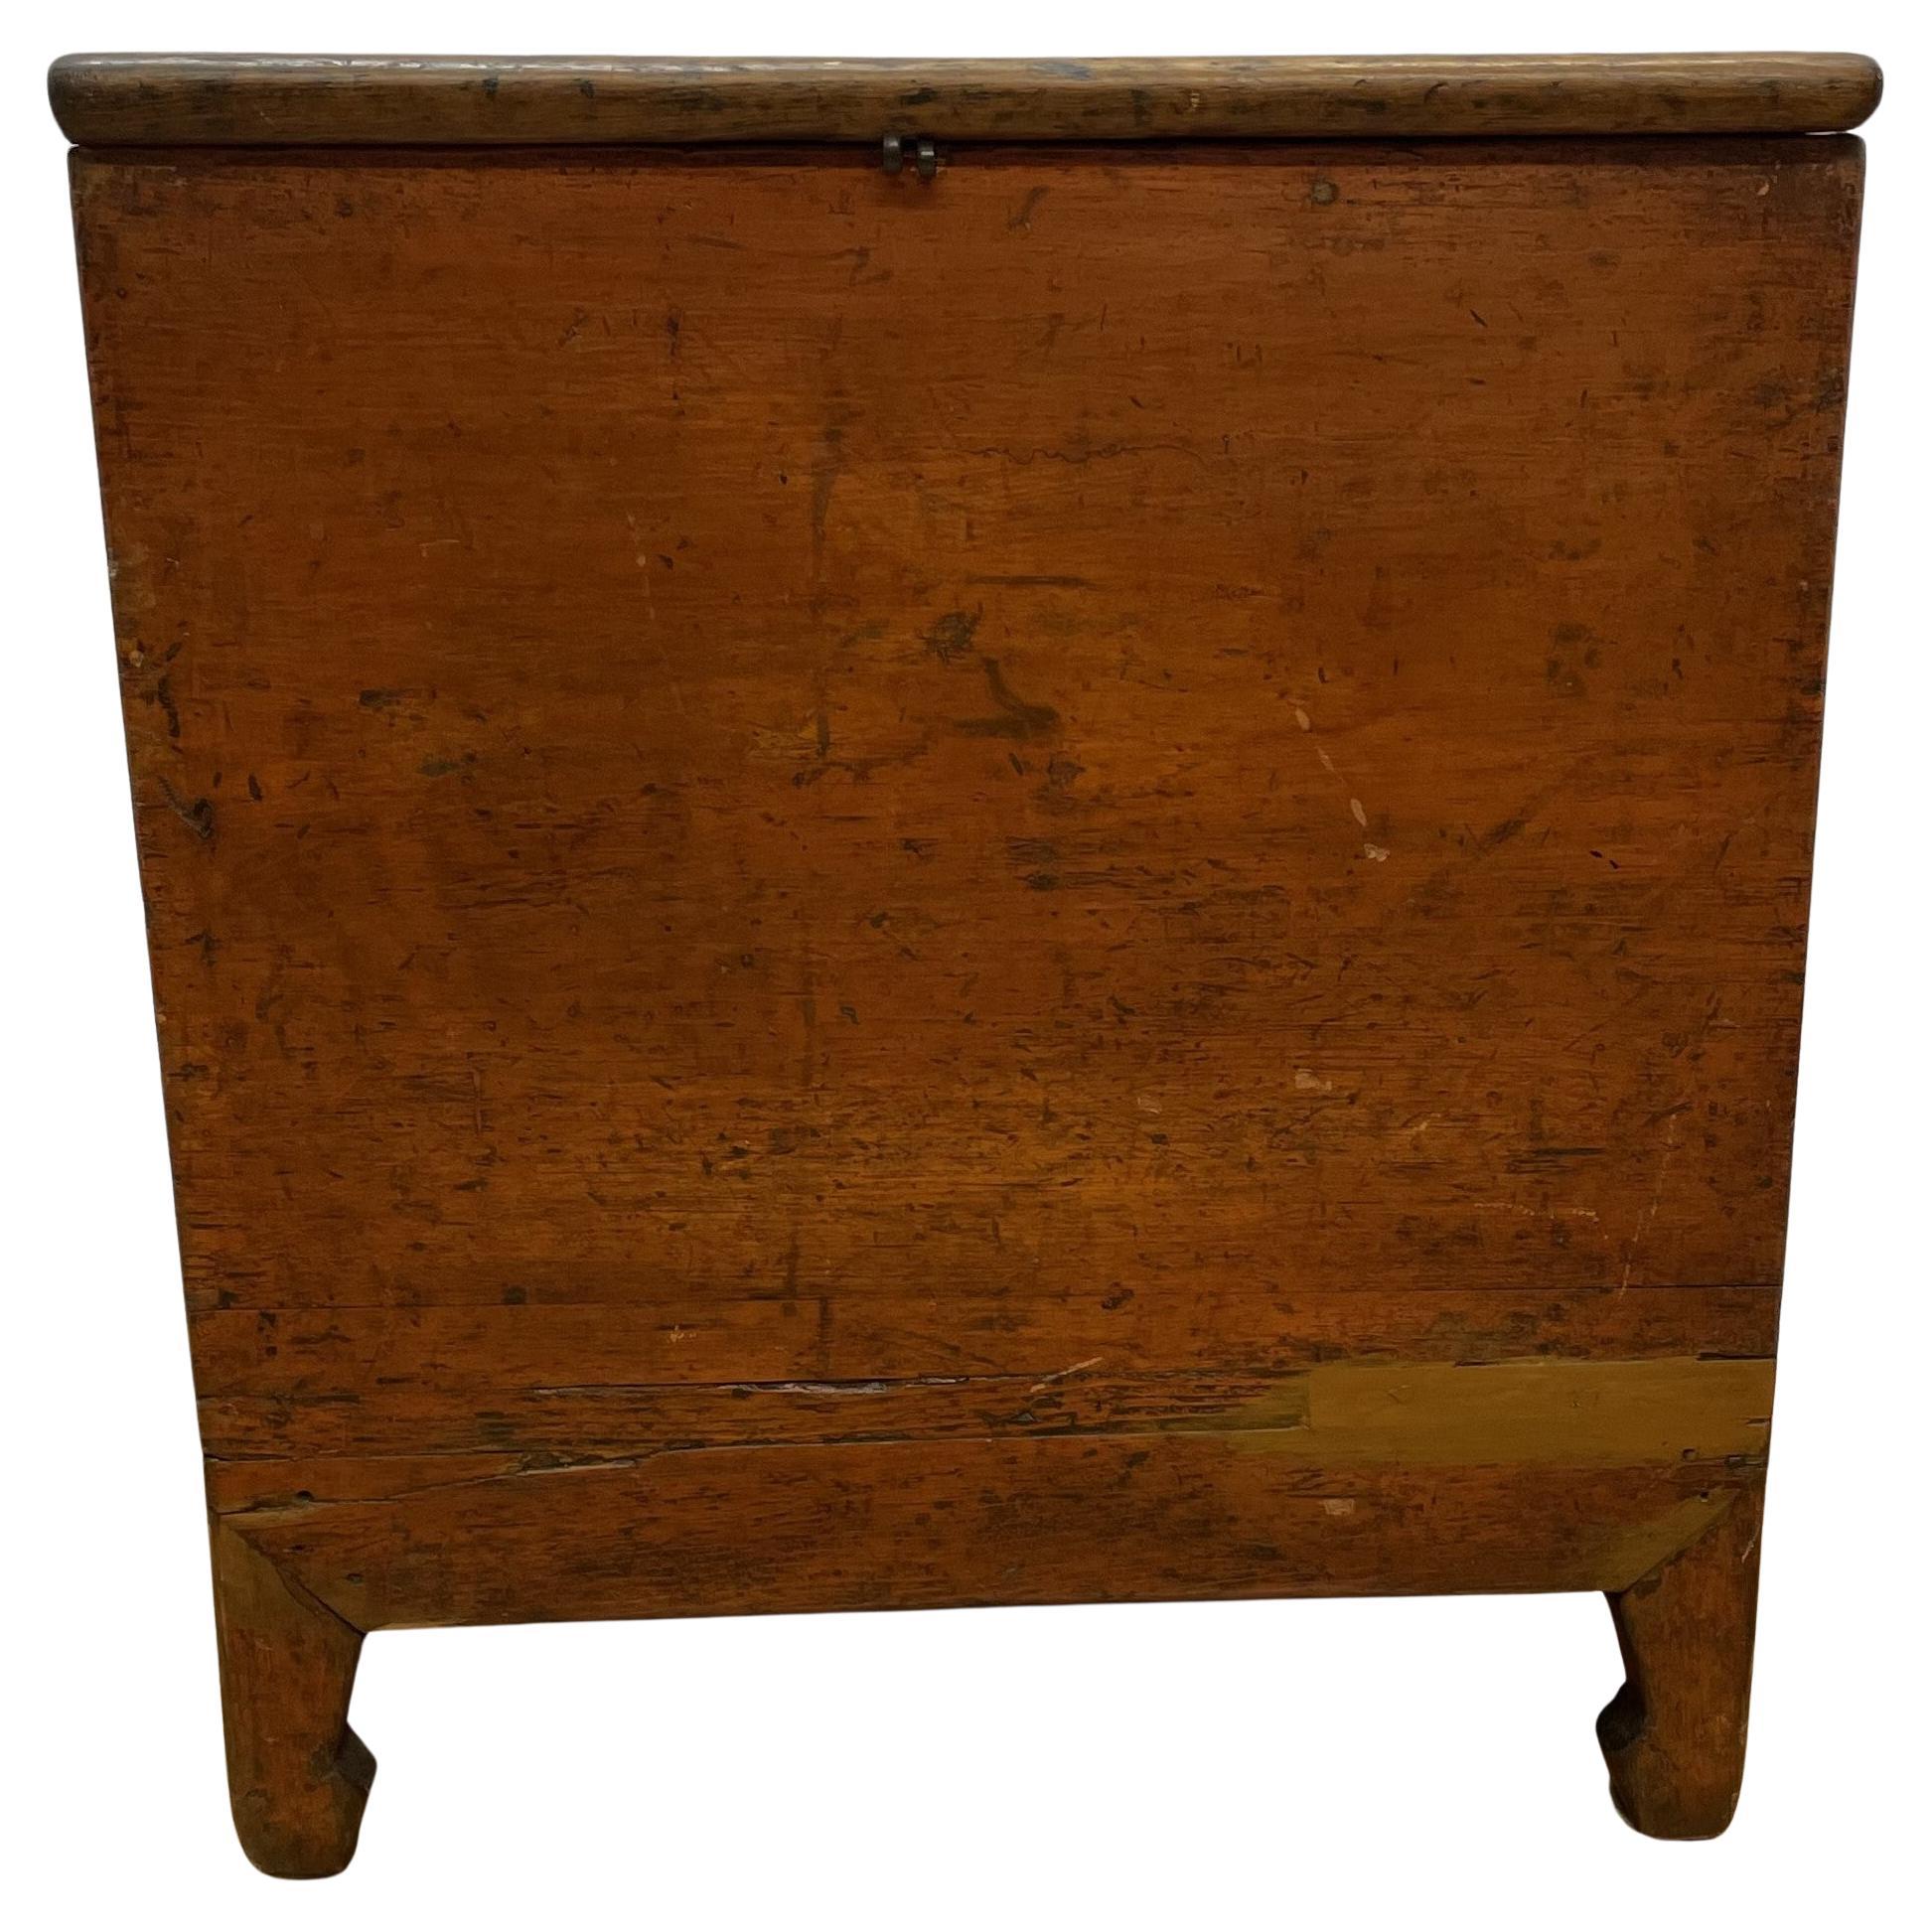 18th - 19th century sugar chest